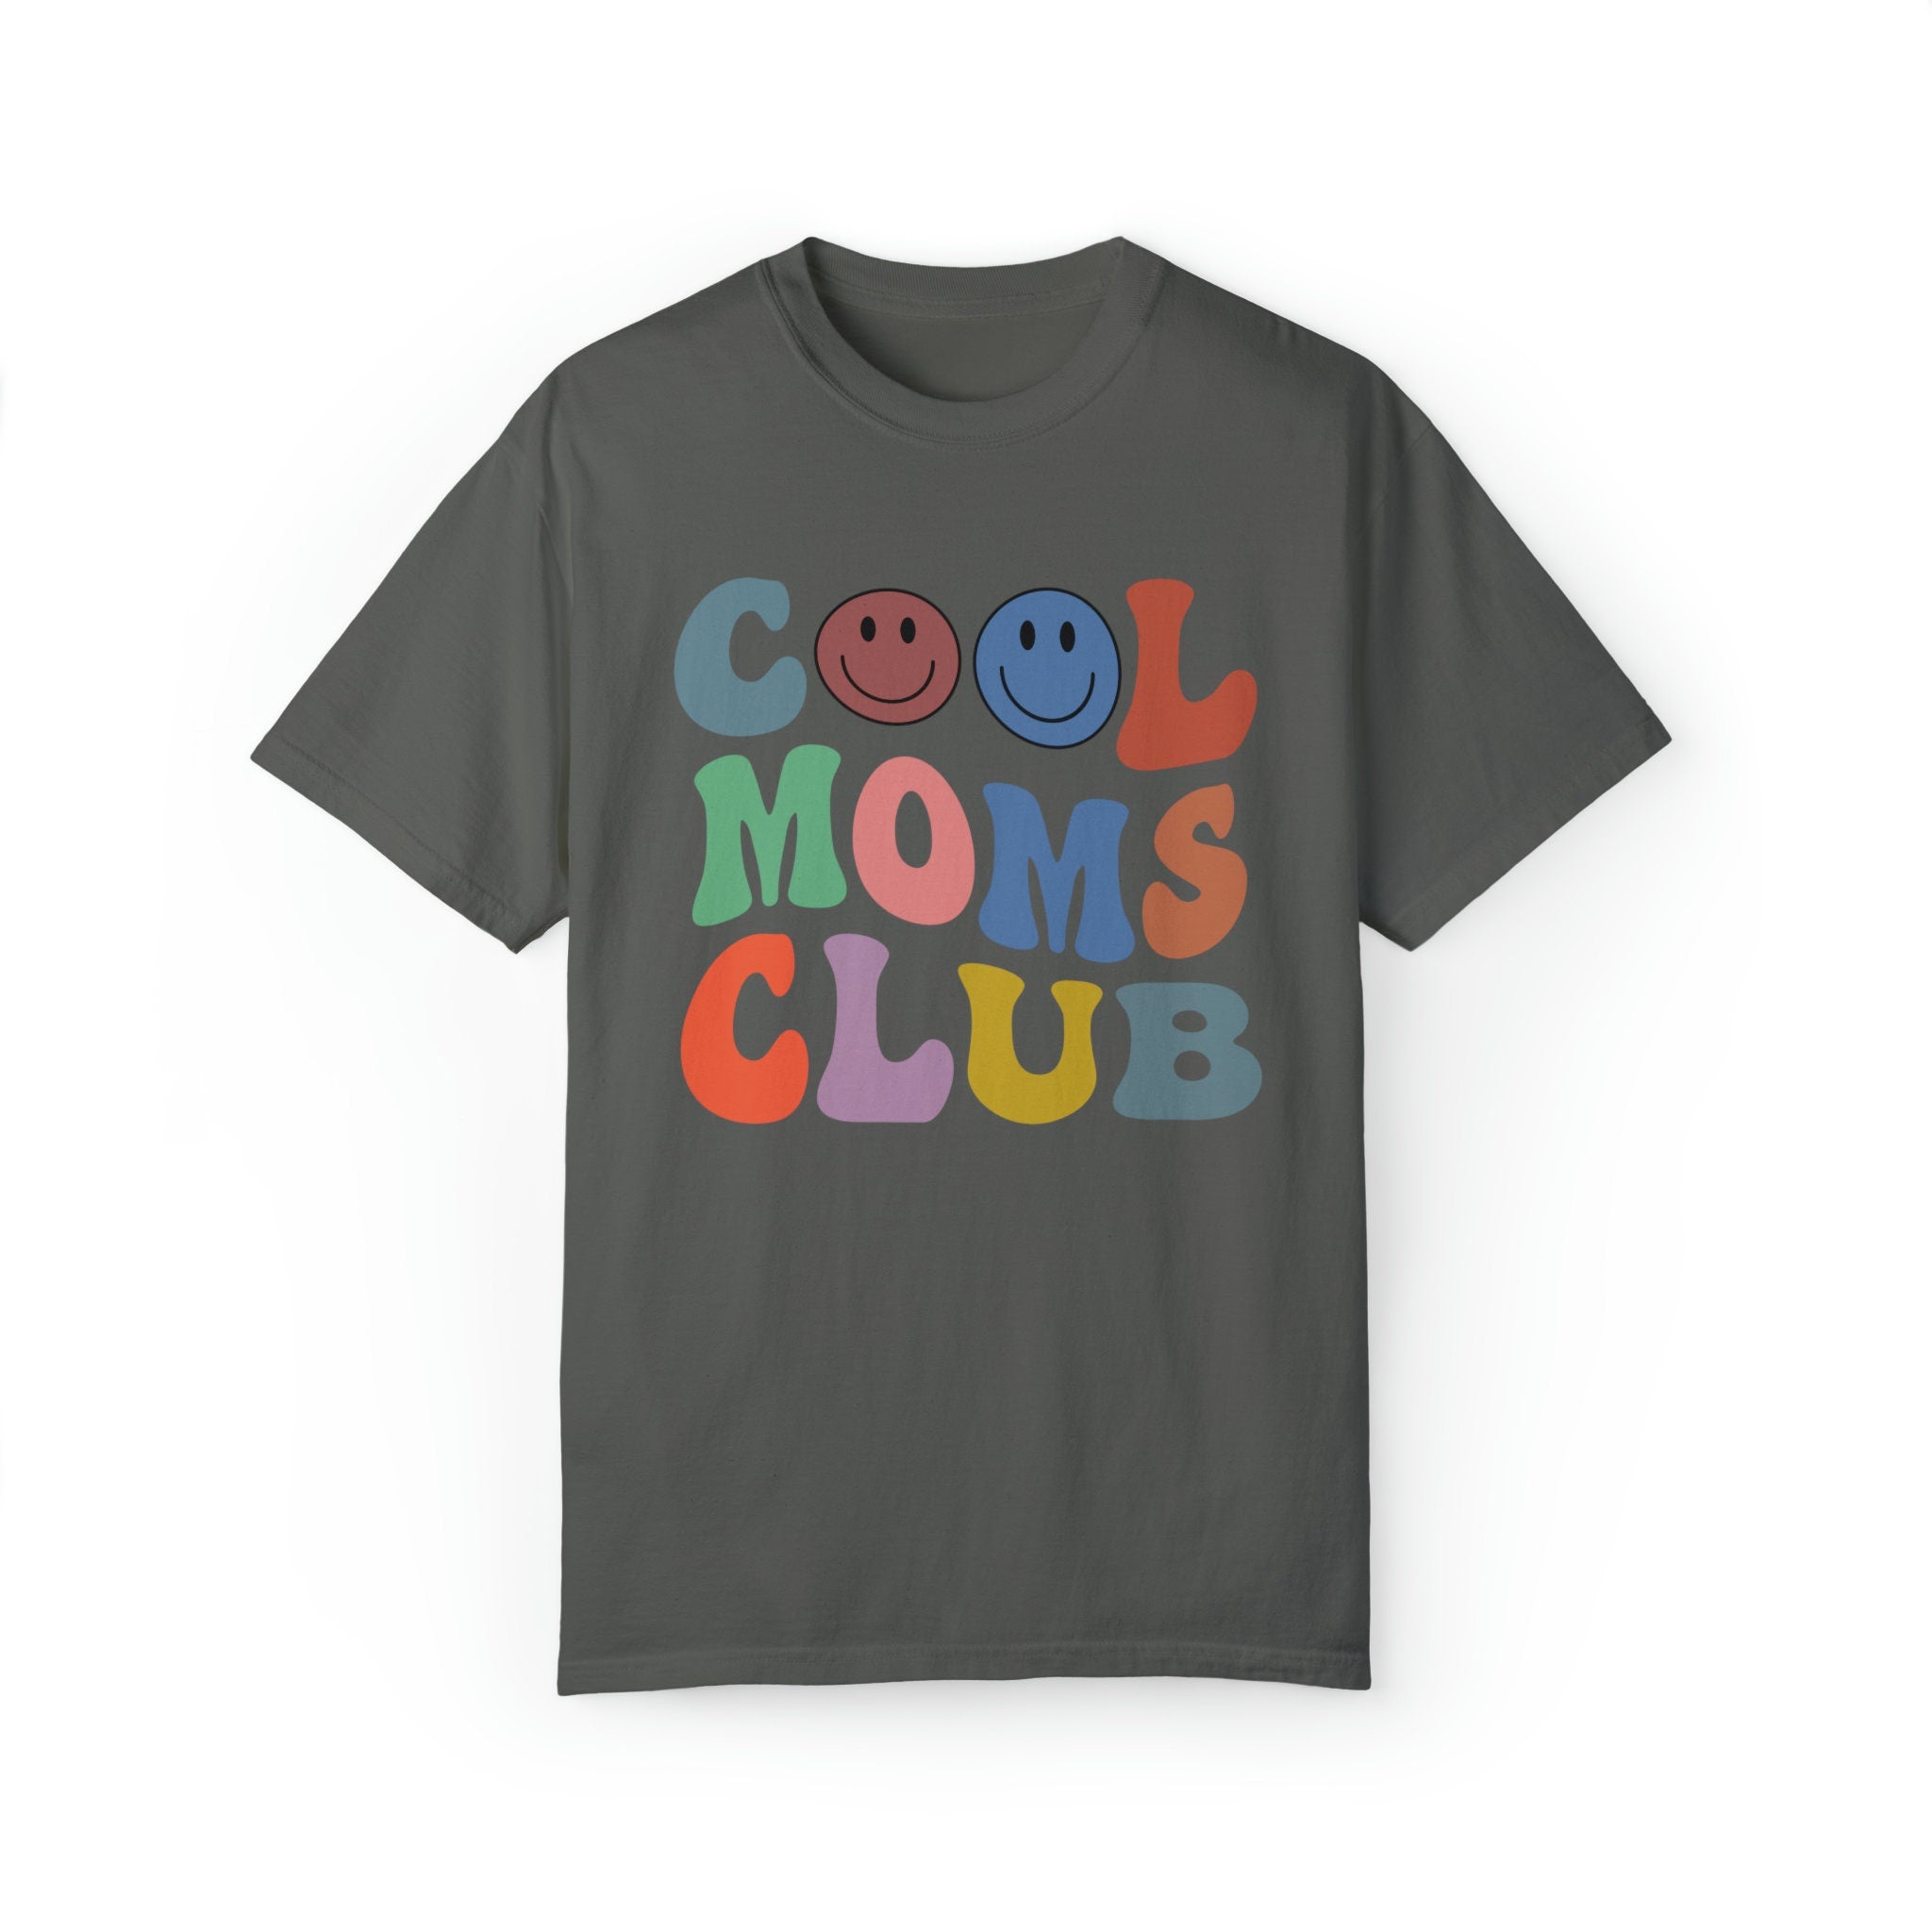 Cool moms gifts, Cool Moms Club Tee shirt, Cool Mom shirt, Cool Mom Club, Retro Vintage Colorful Mom shirt, Mama New Mom Gift, Mom Gift